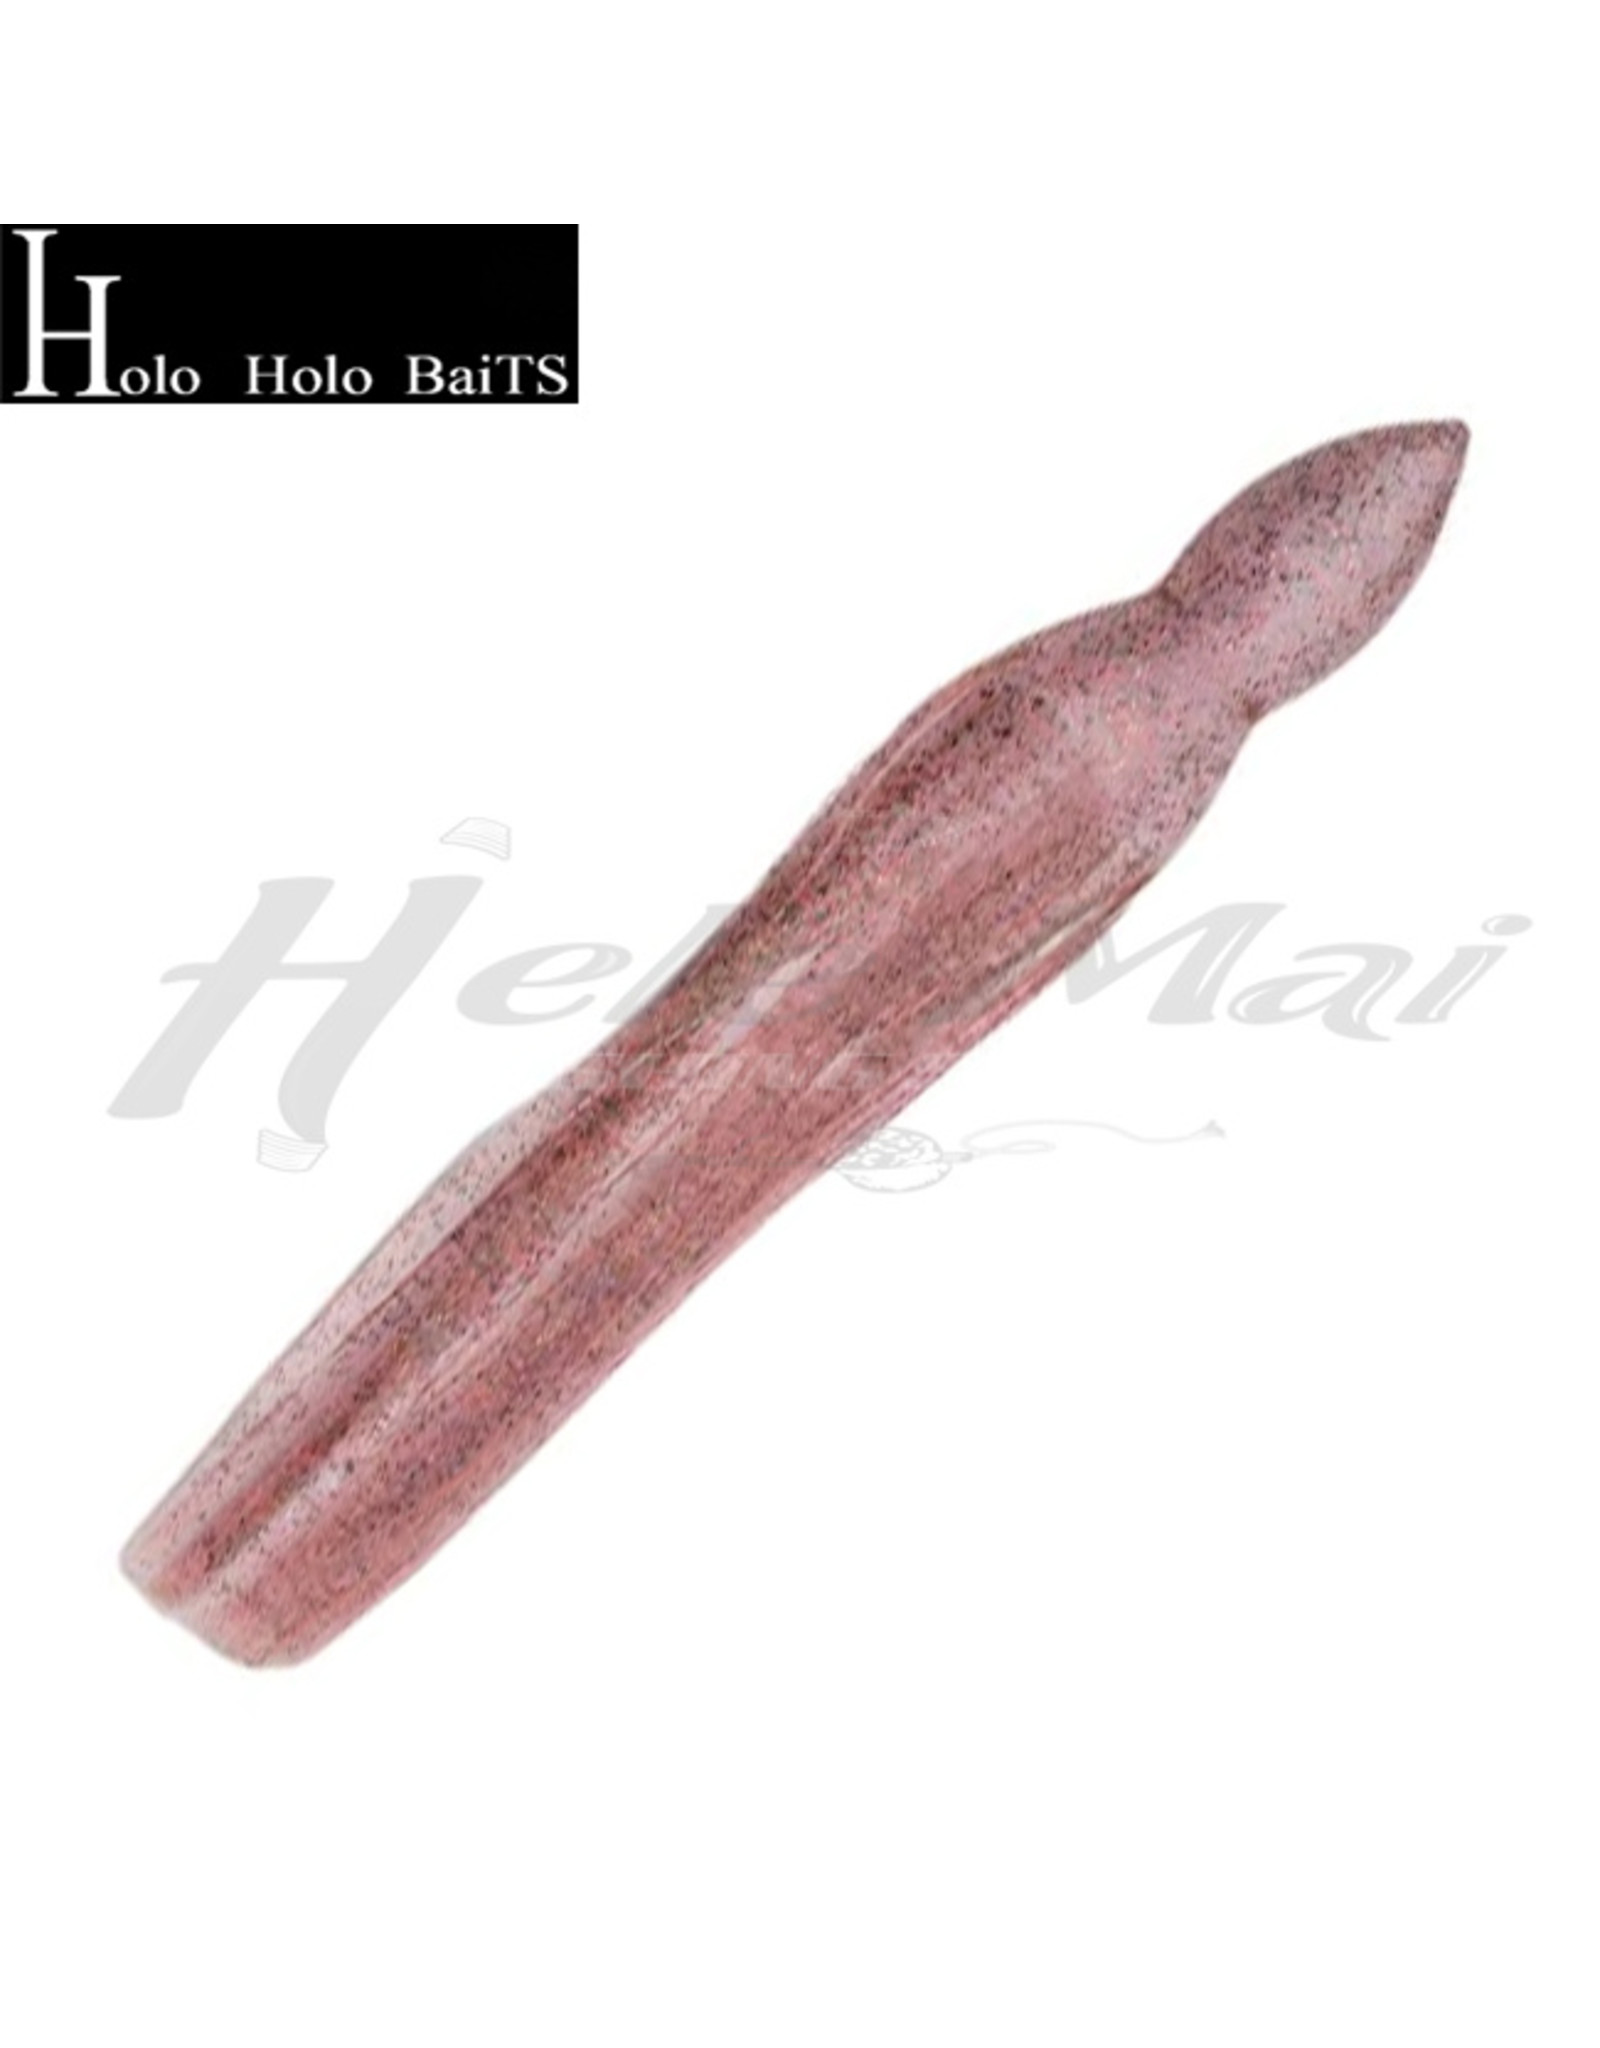 HOLO HOLO HAWAII (HHH) HH, 7" SQUID SKIRT PINK RAINBOW GLITTER 1472